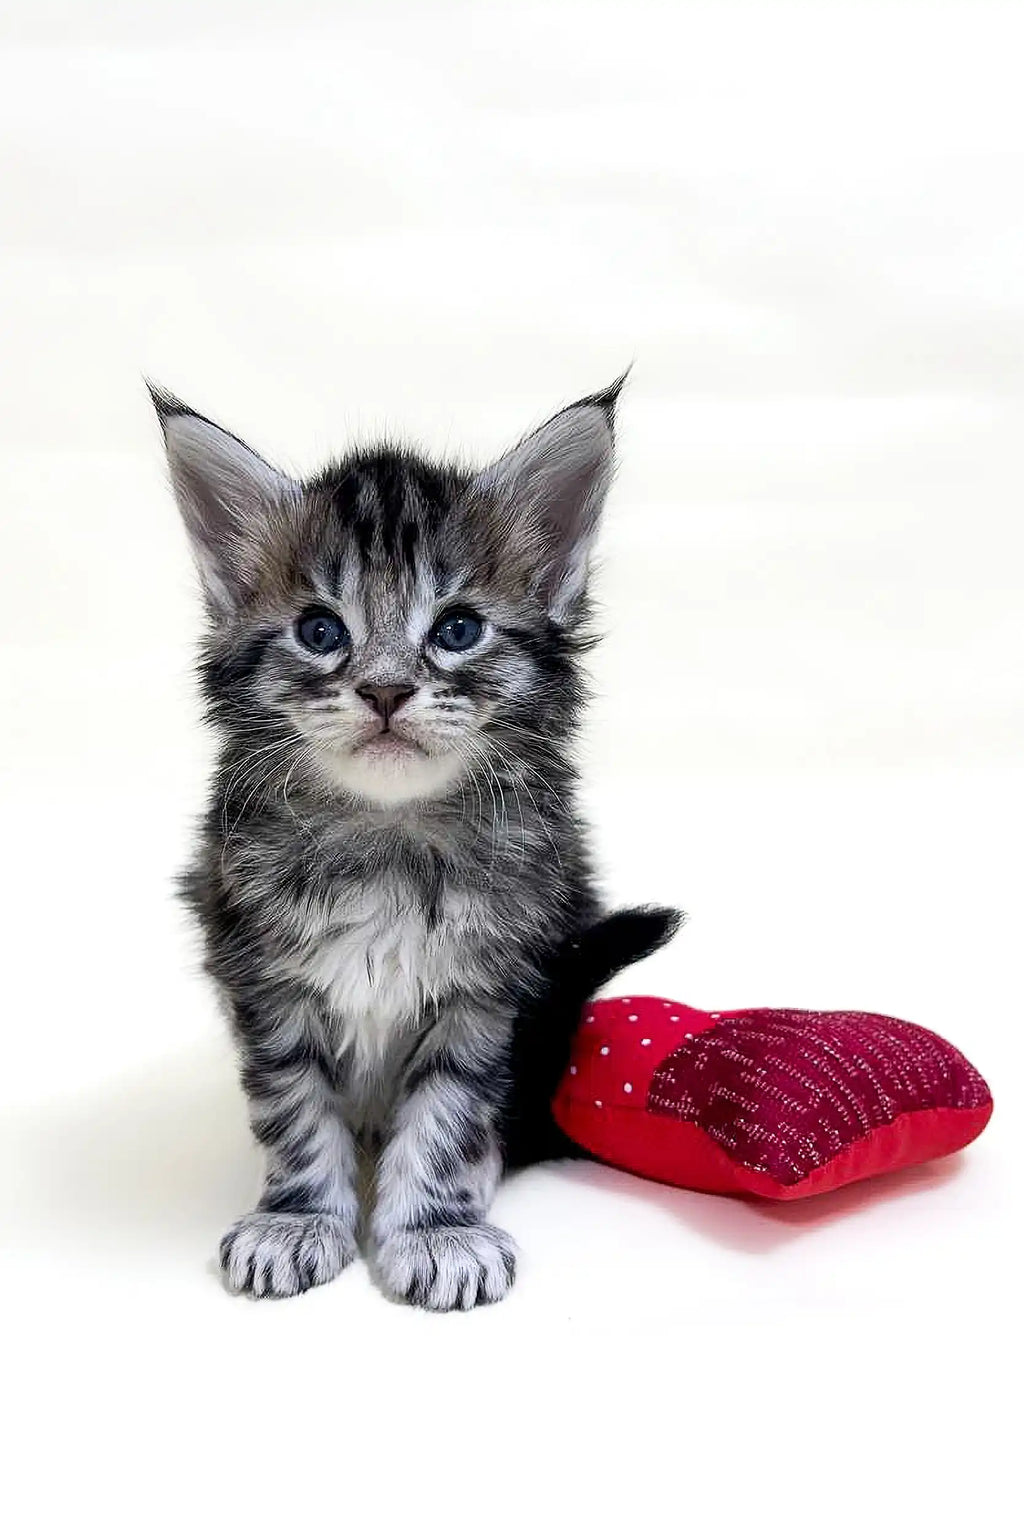 Maine Coon Kittens for Sale Bean | Kitten